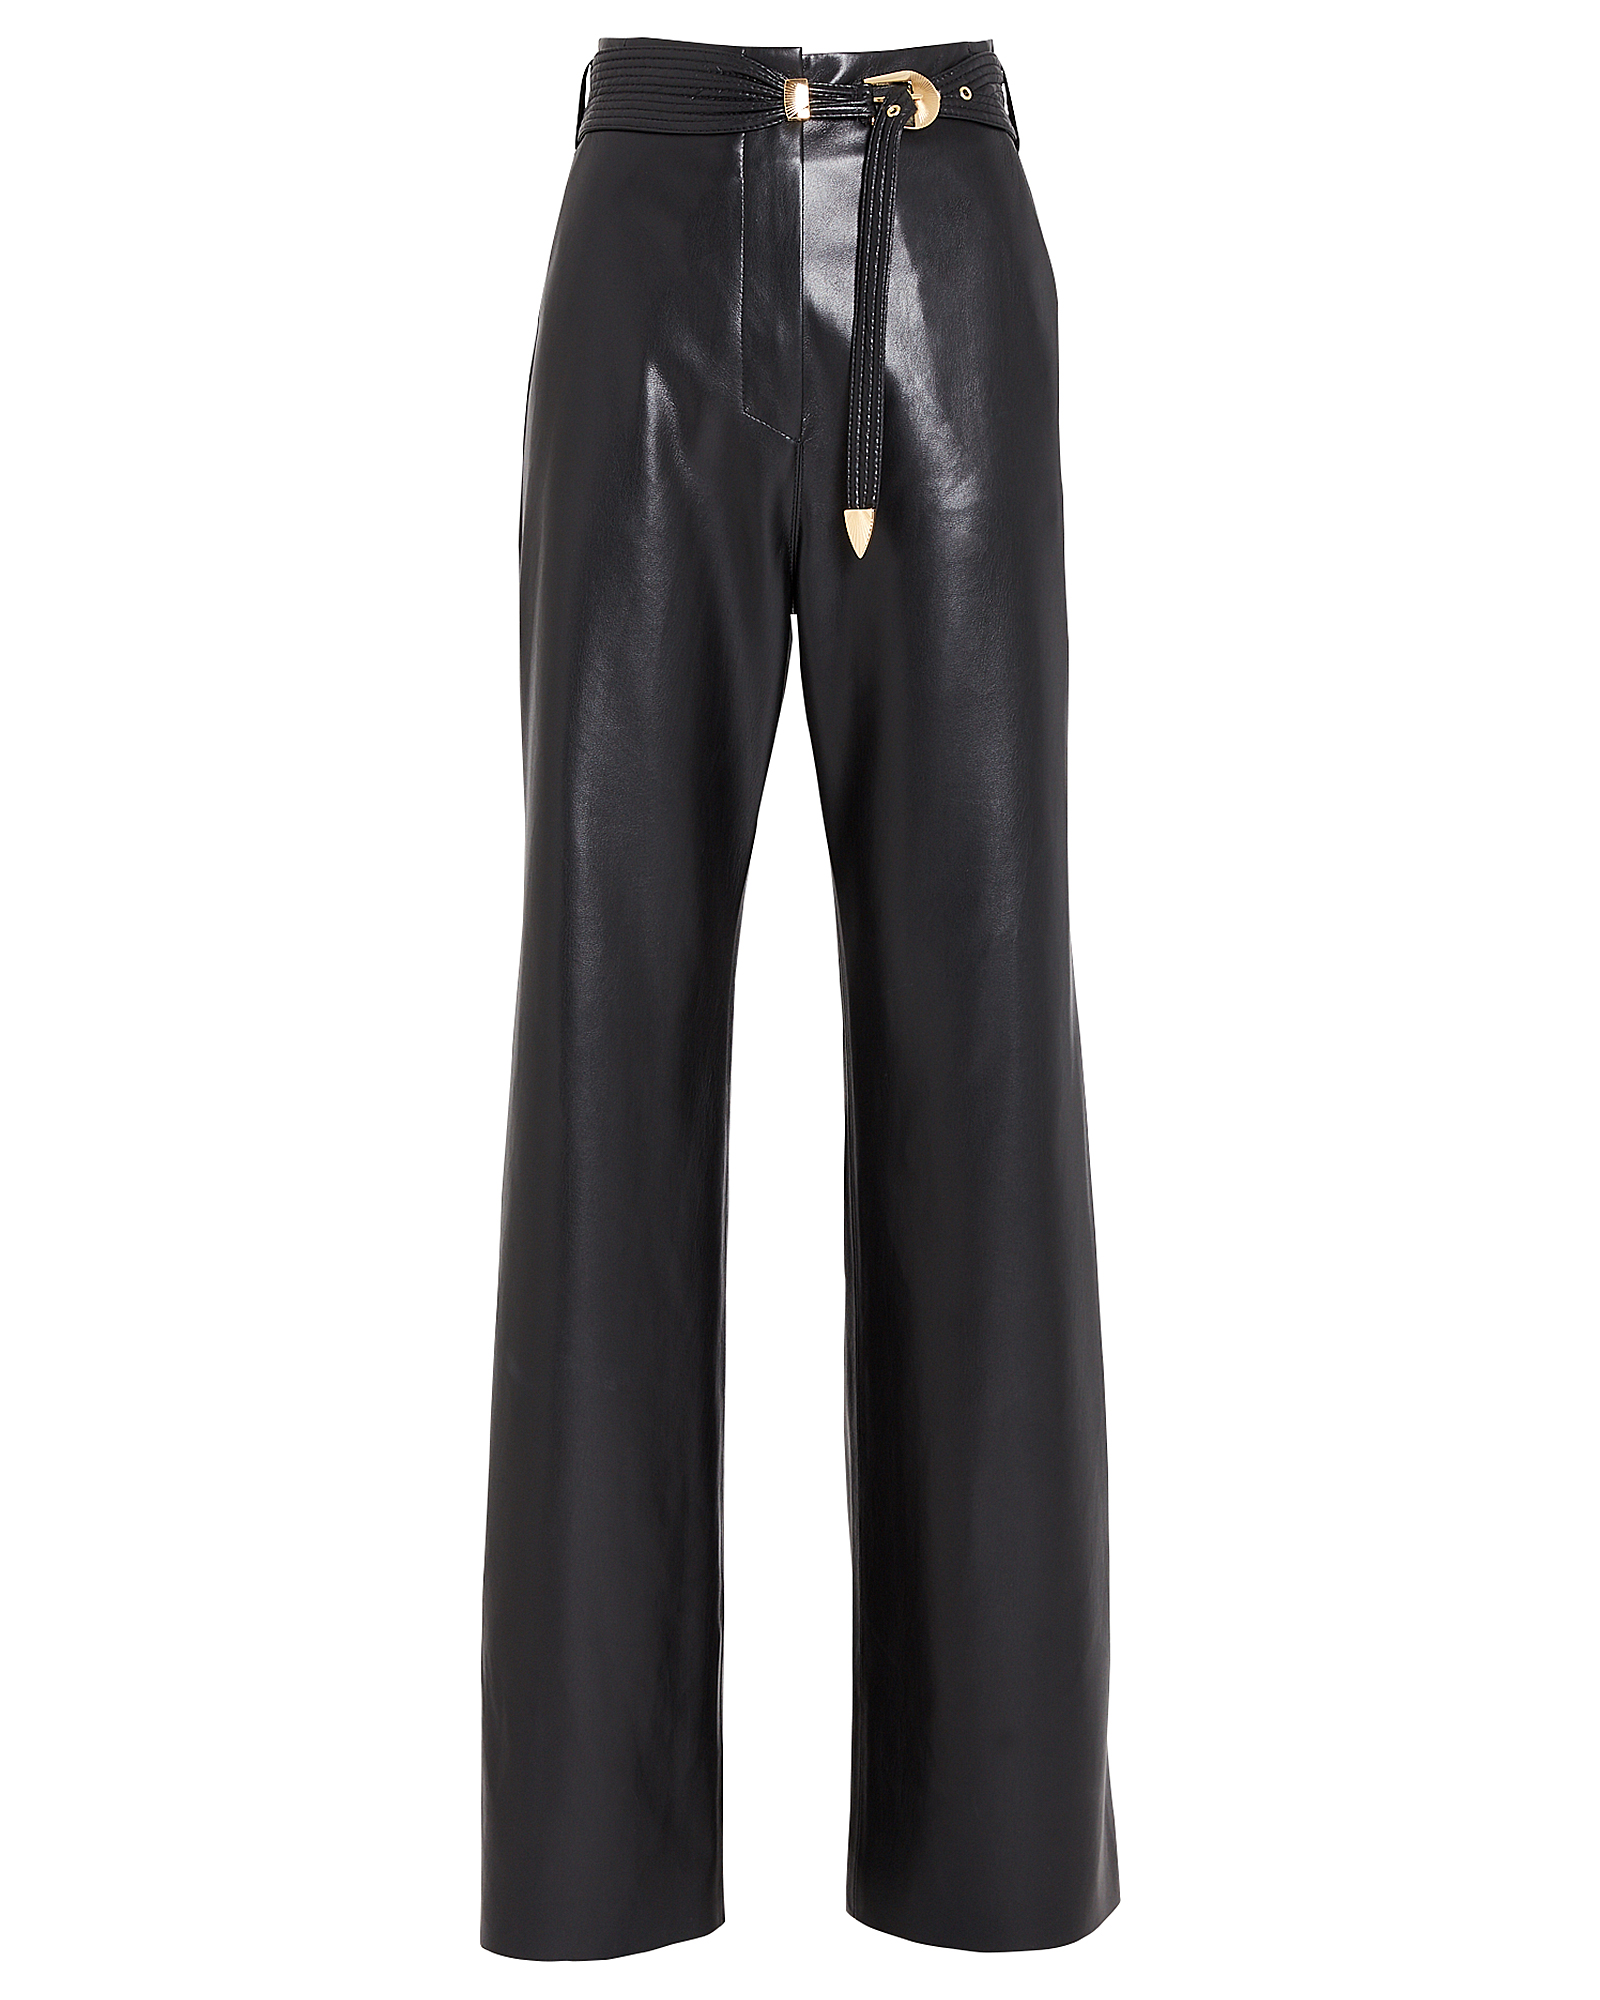 Nanushka Kisa Belted Vegan Leather Pants in black | INTERMIX®